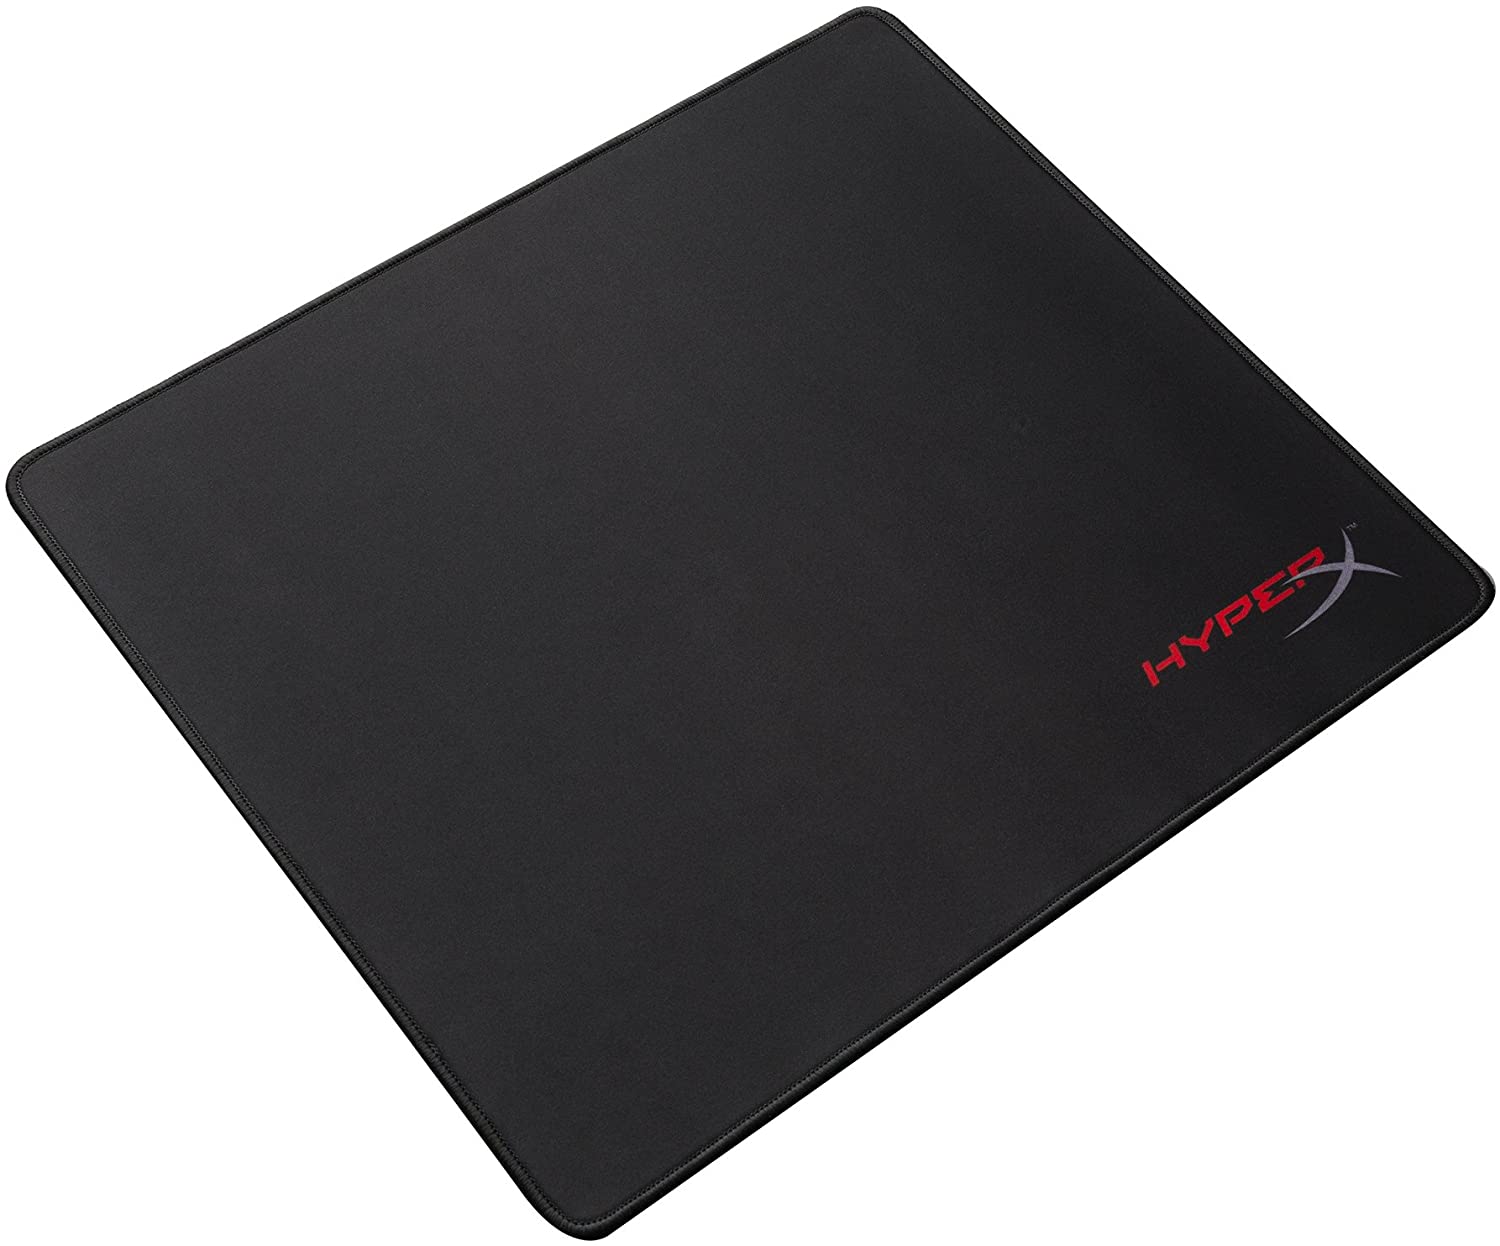 HyperX FURY S - Pro Gaming Large Mouse Pad - Black - Pro-Distributing